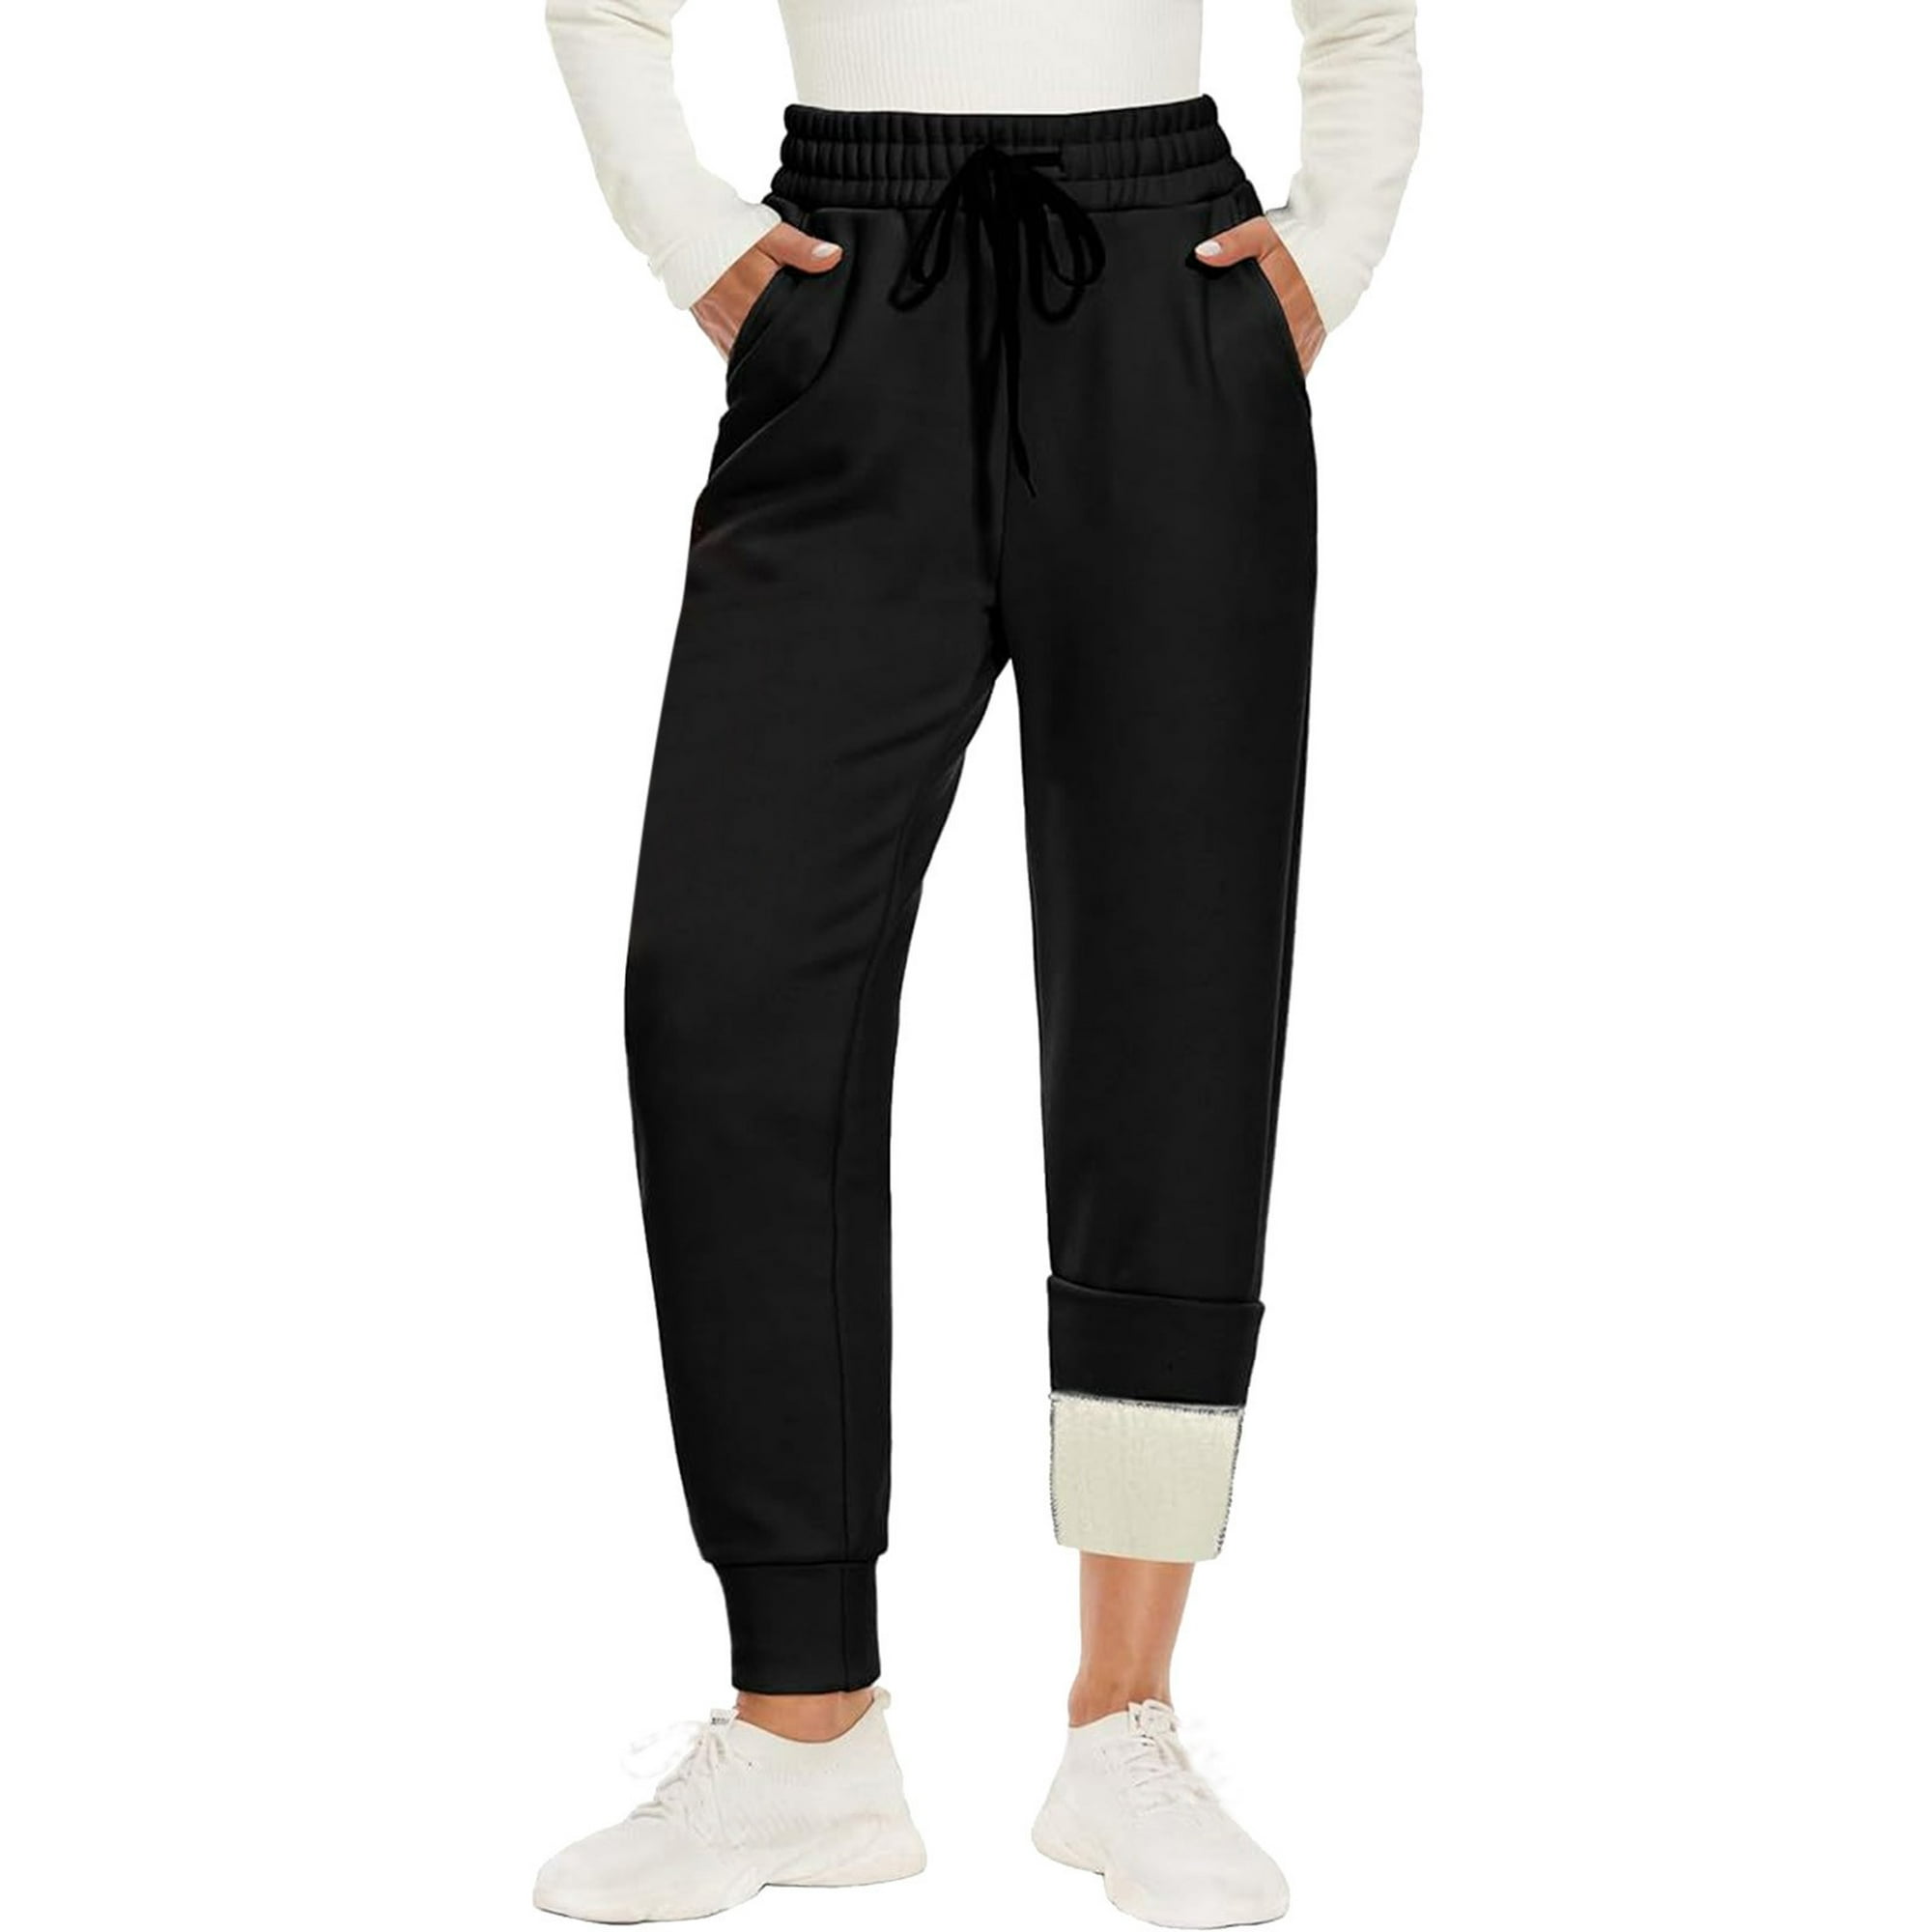 Gibobby Pantalones para mujer para el frío Pantalones de jogging para mujer  forrados con 2 bolsillos Gibobby